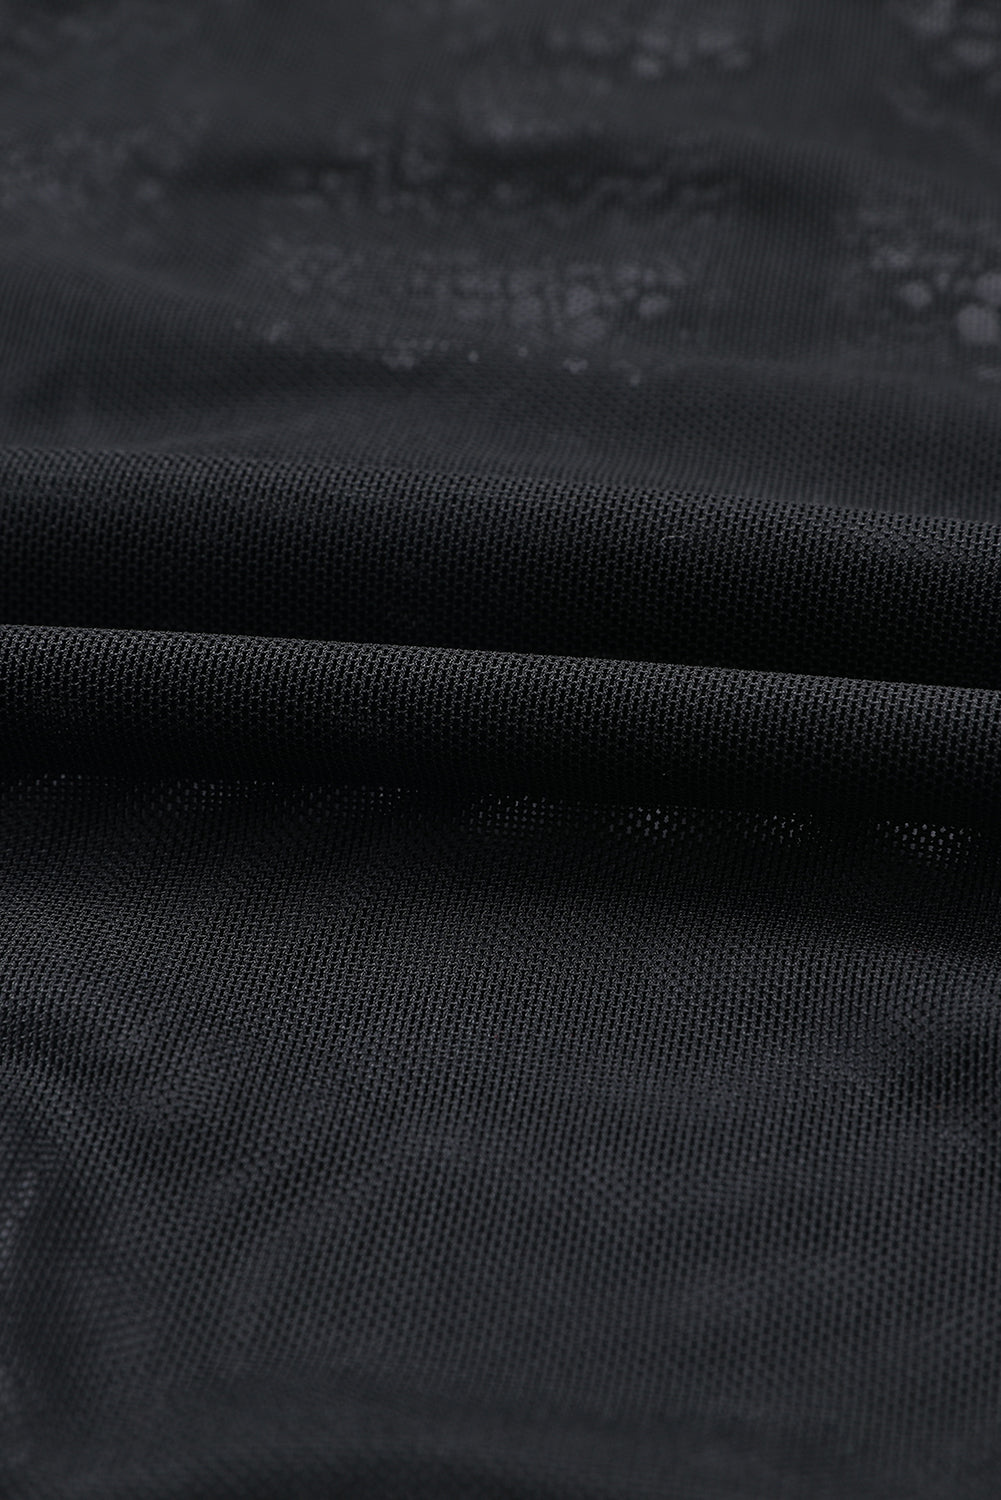 Black Spaghetti Straps Lace Panel Bodysuit